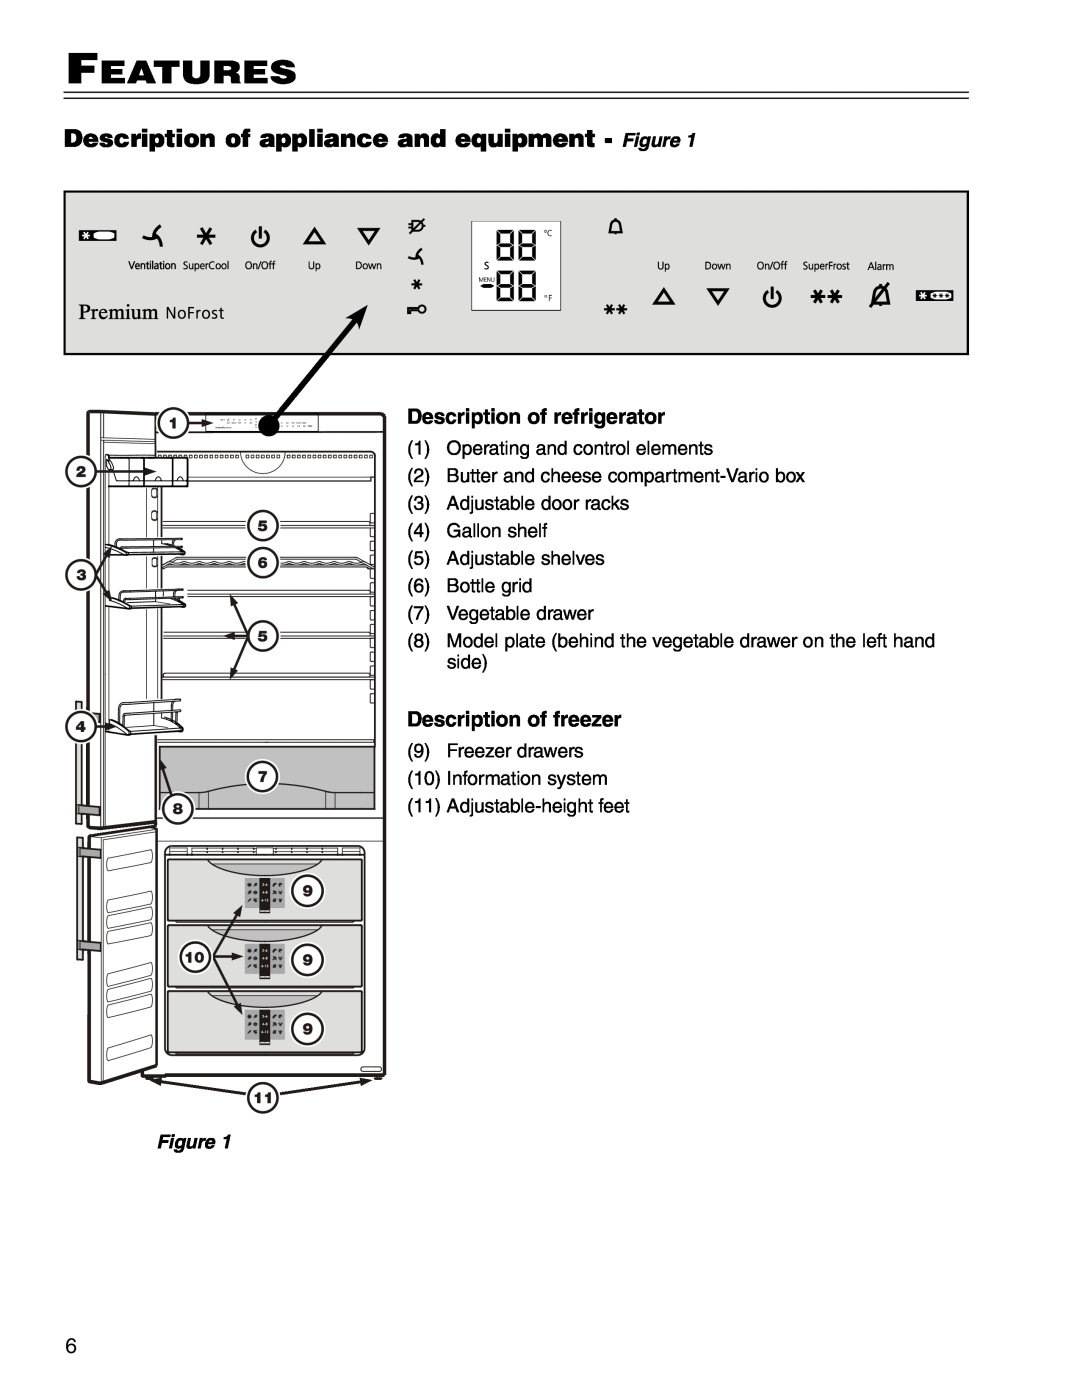 Liebherr CS 1611 7801 149-00 manual Features, Description of appliance and equipment - Figure, Description of refrigerator 